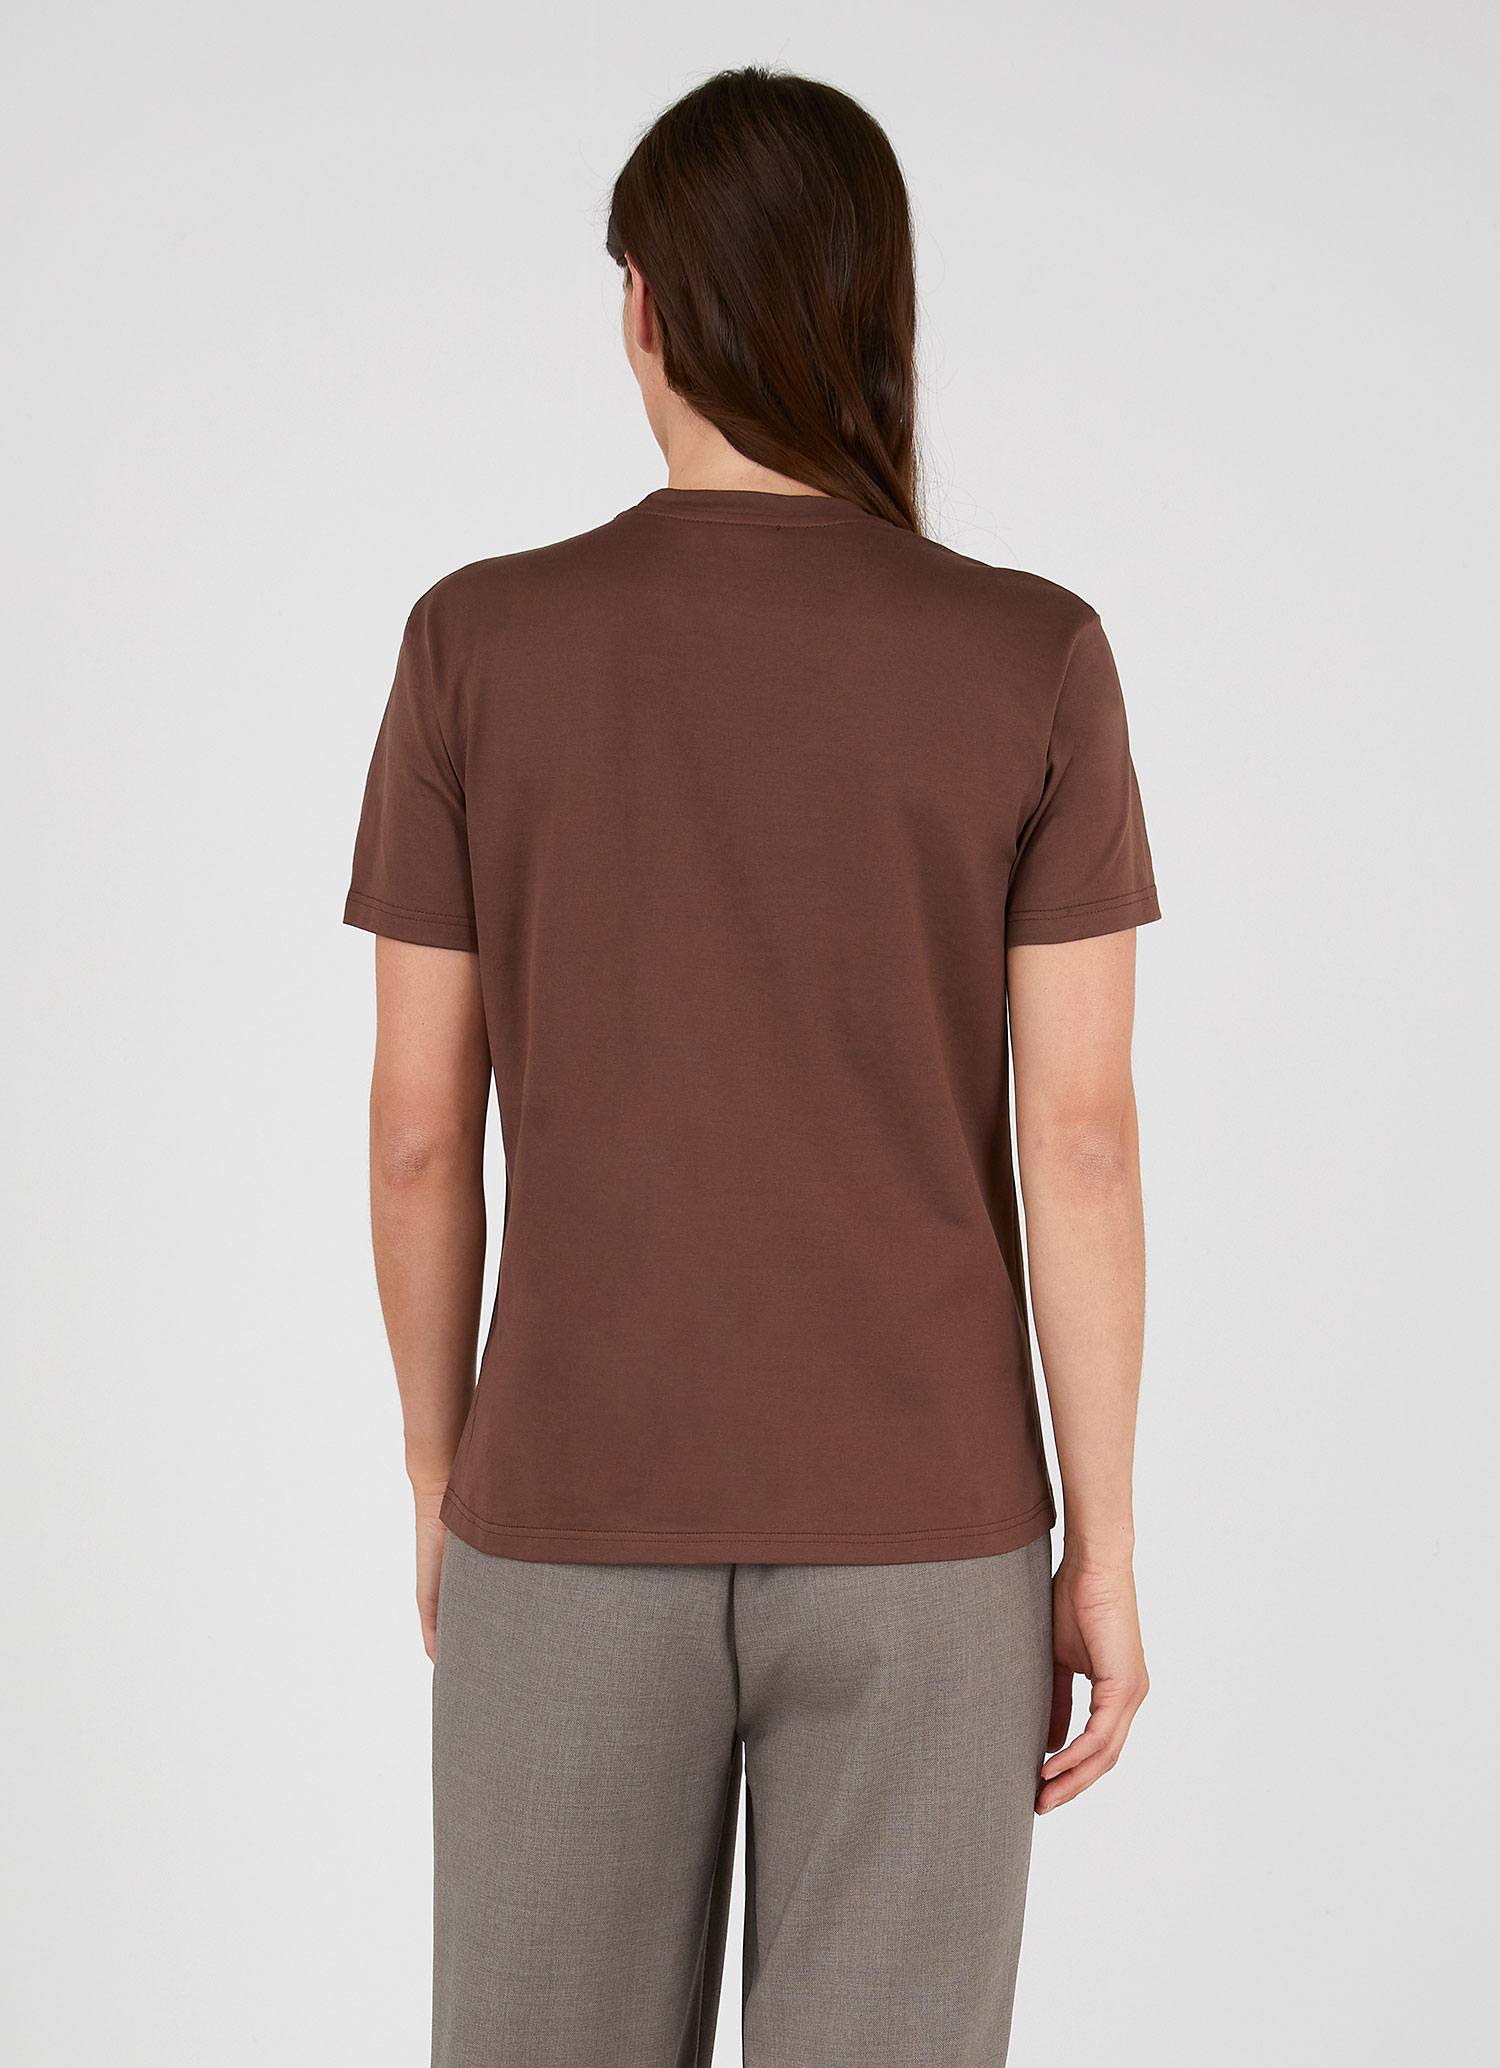 Women's Boy Fit T-shirt in Cocoa